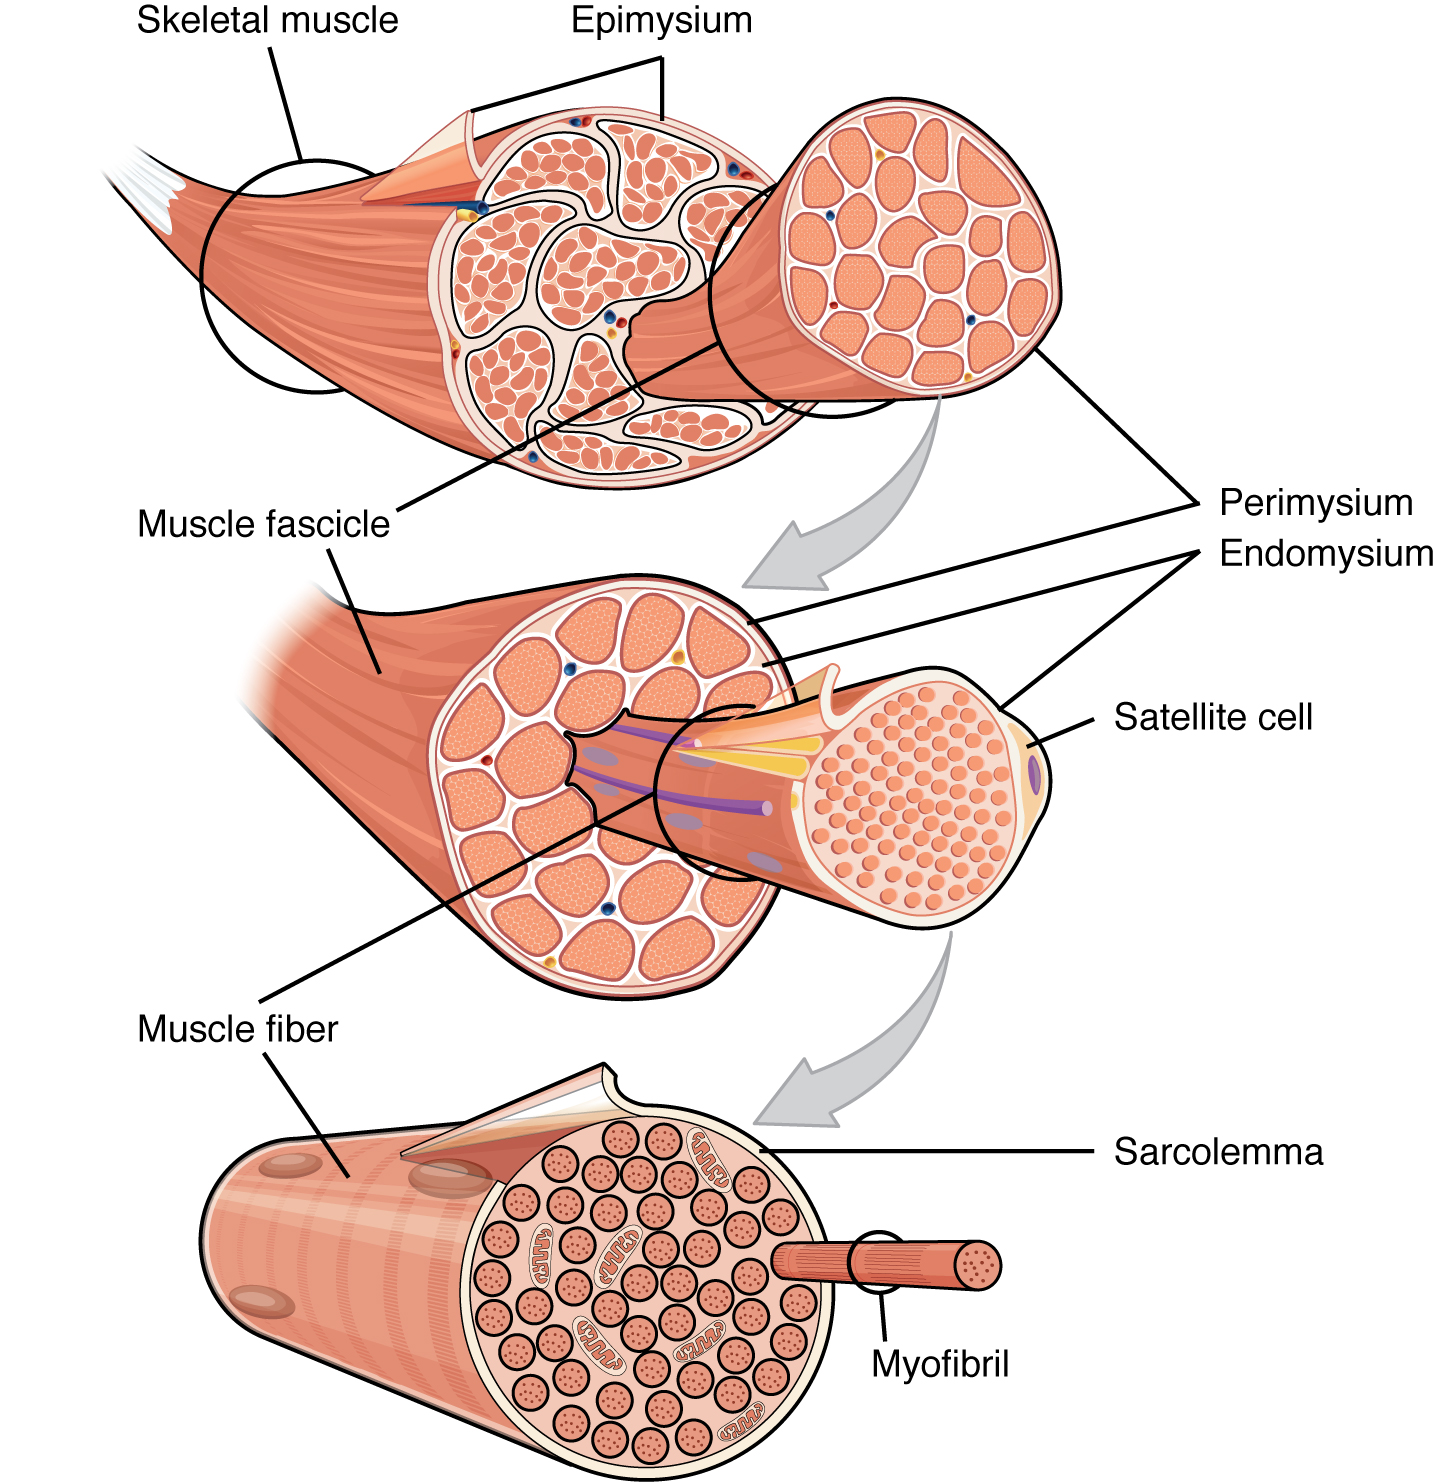 Three levels of skeletal muscle arrangement